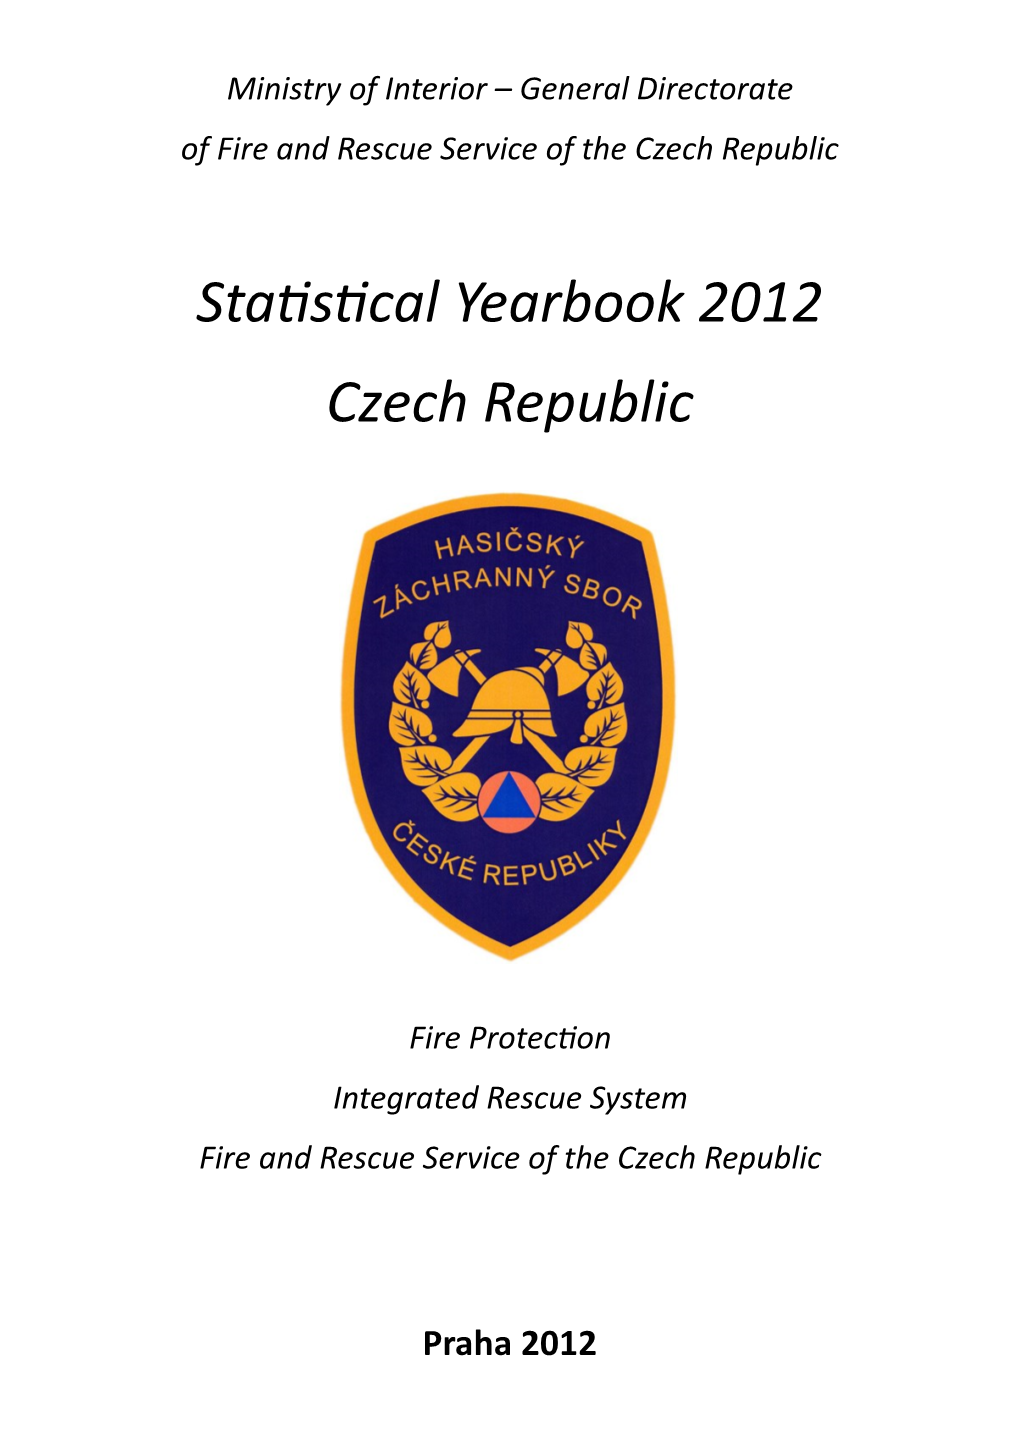 Statistical Yearbook 2012 Czech Republic